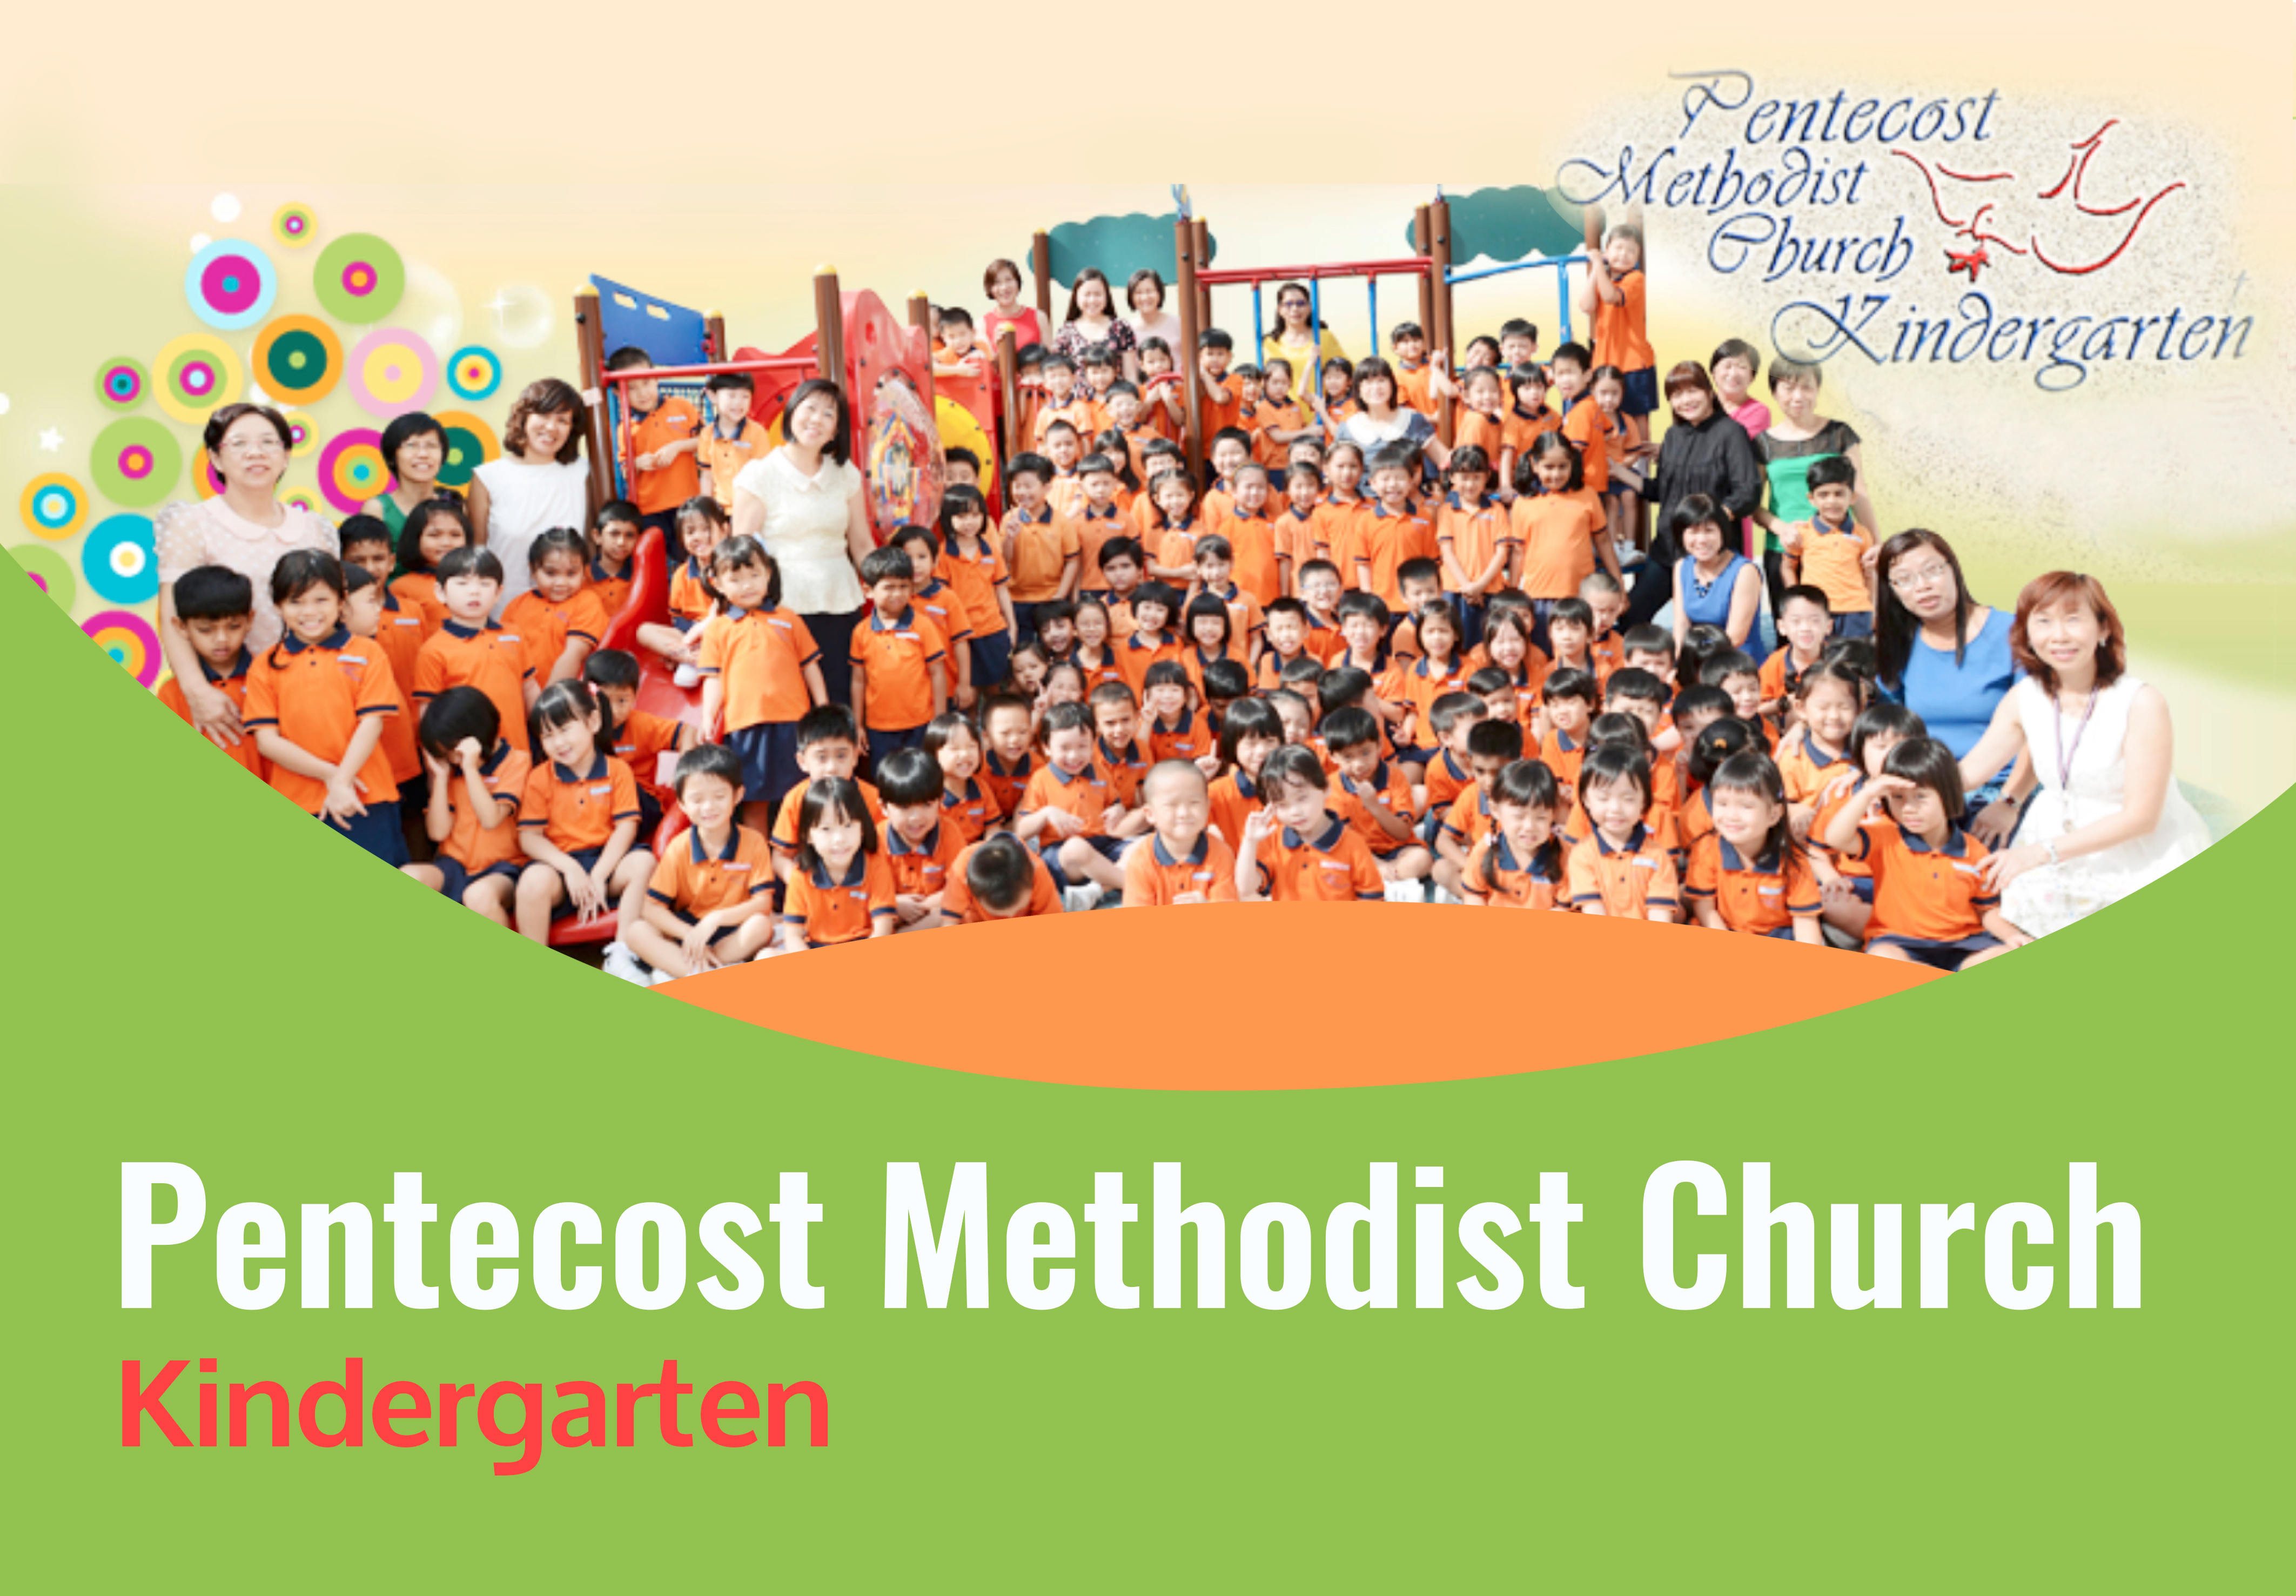 /qws/slot/u50190/Blog/Blog Cover/Blog Cover Image - Pentecost Methodist Revised.jpg